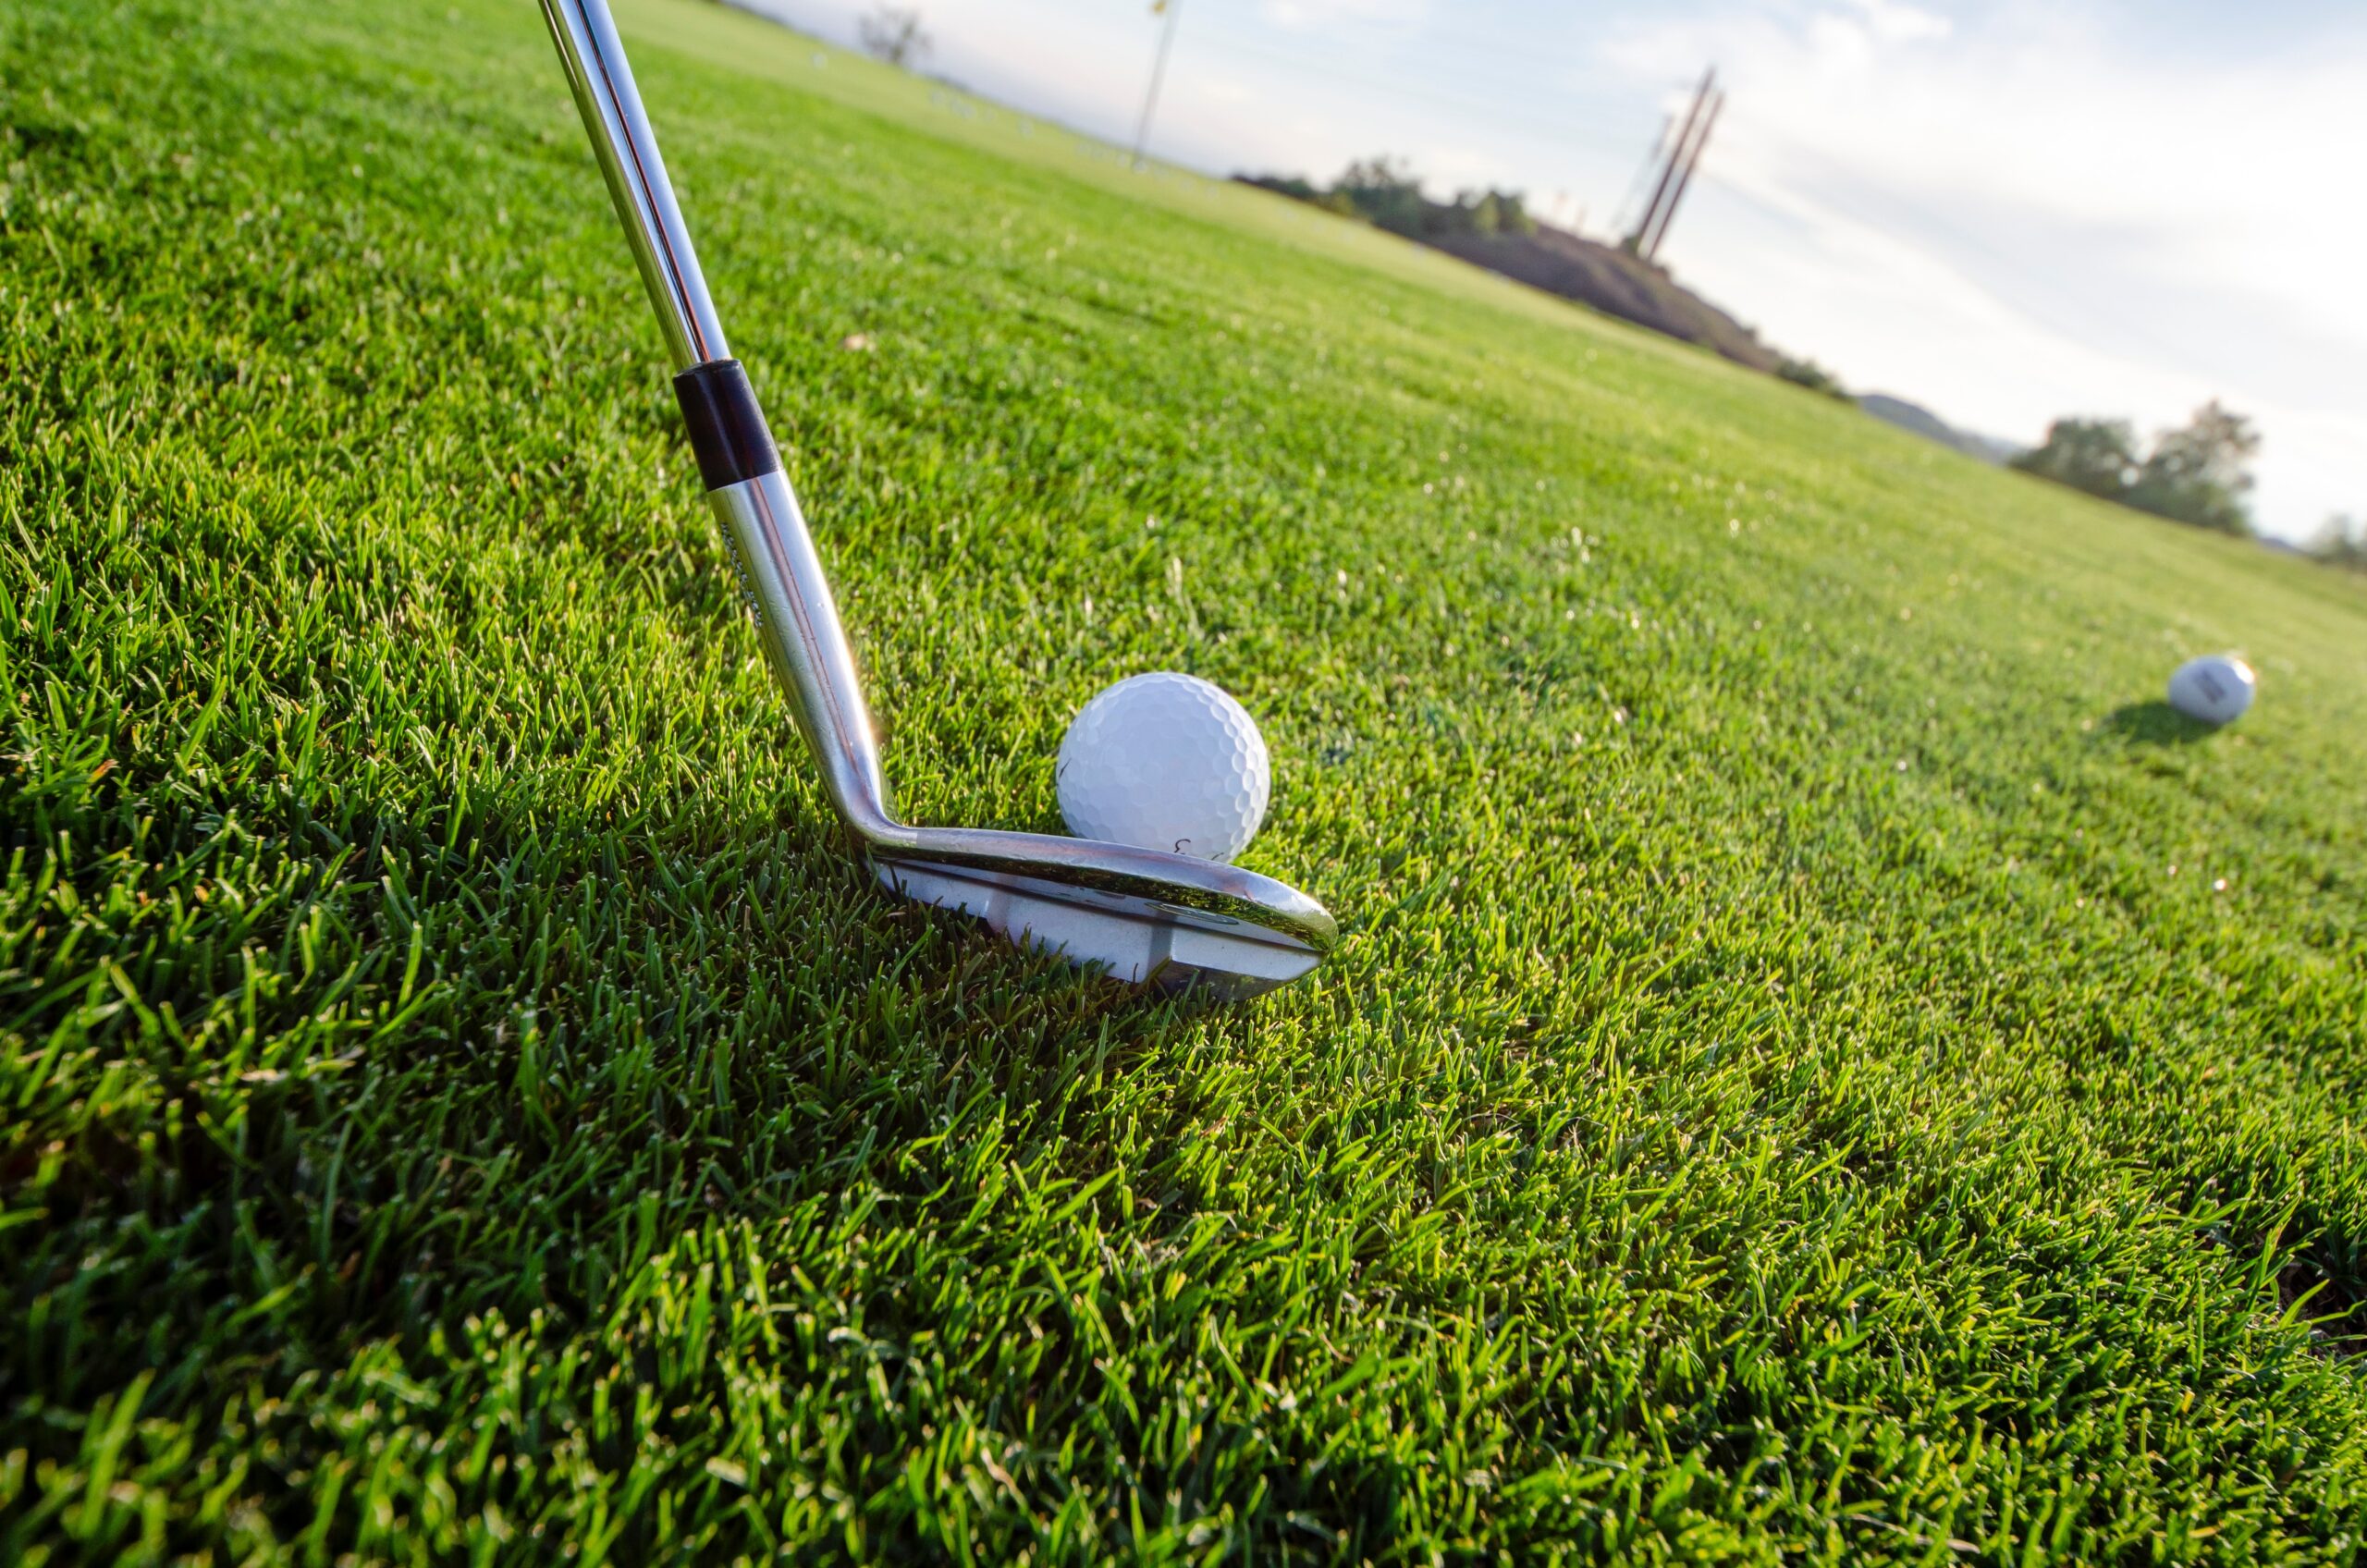 Golf club and ball on golf green